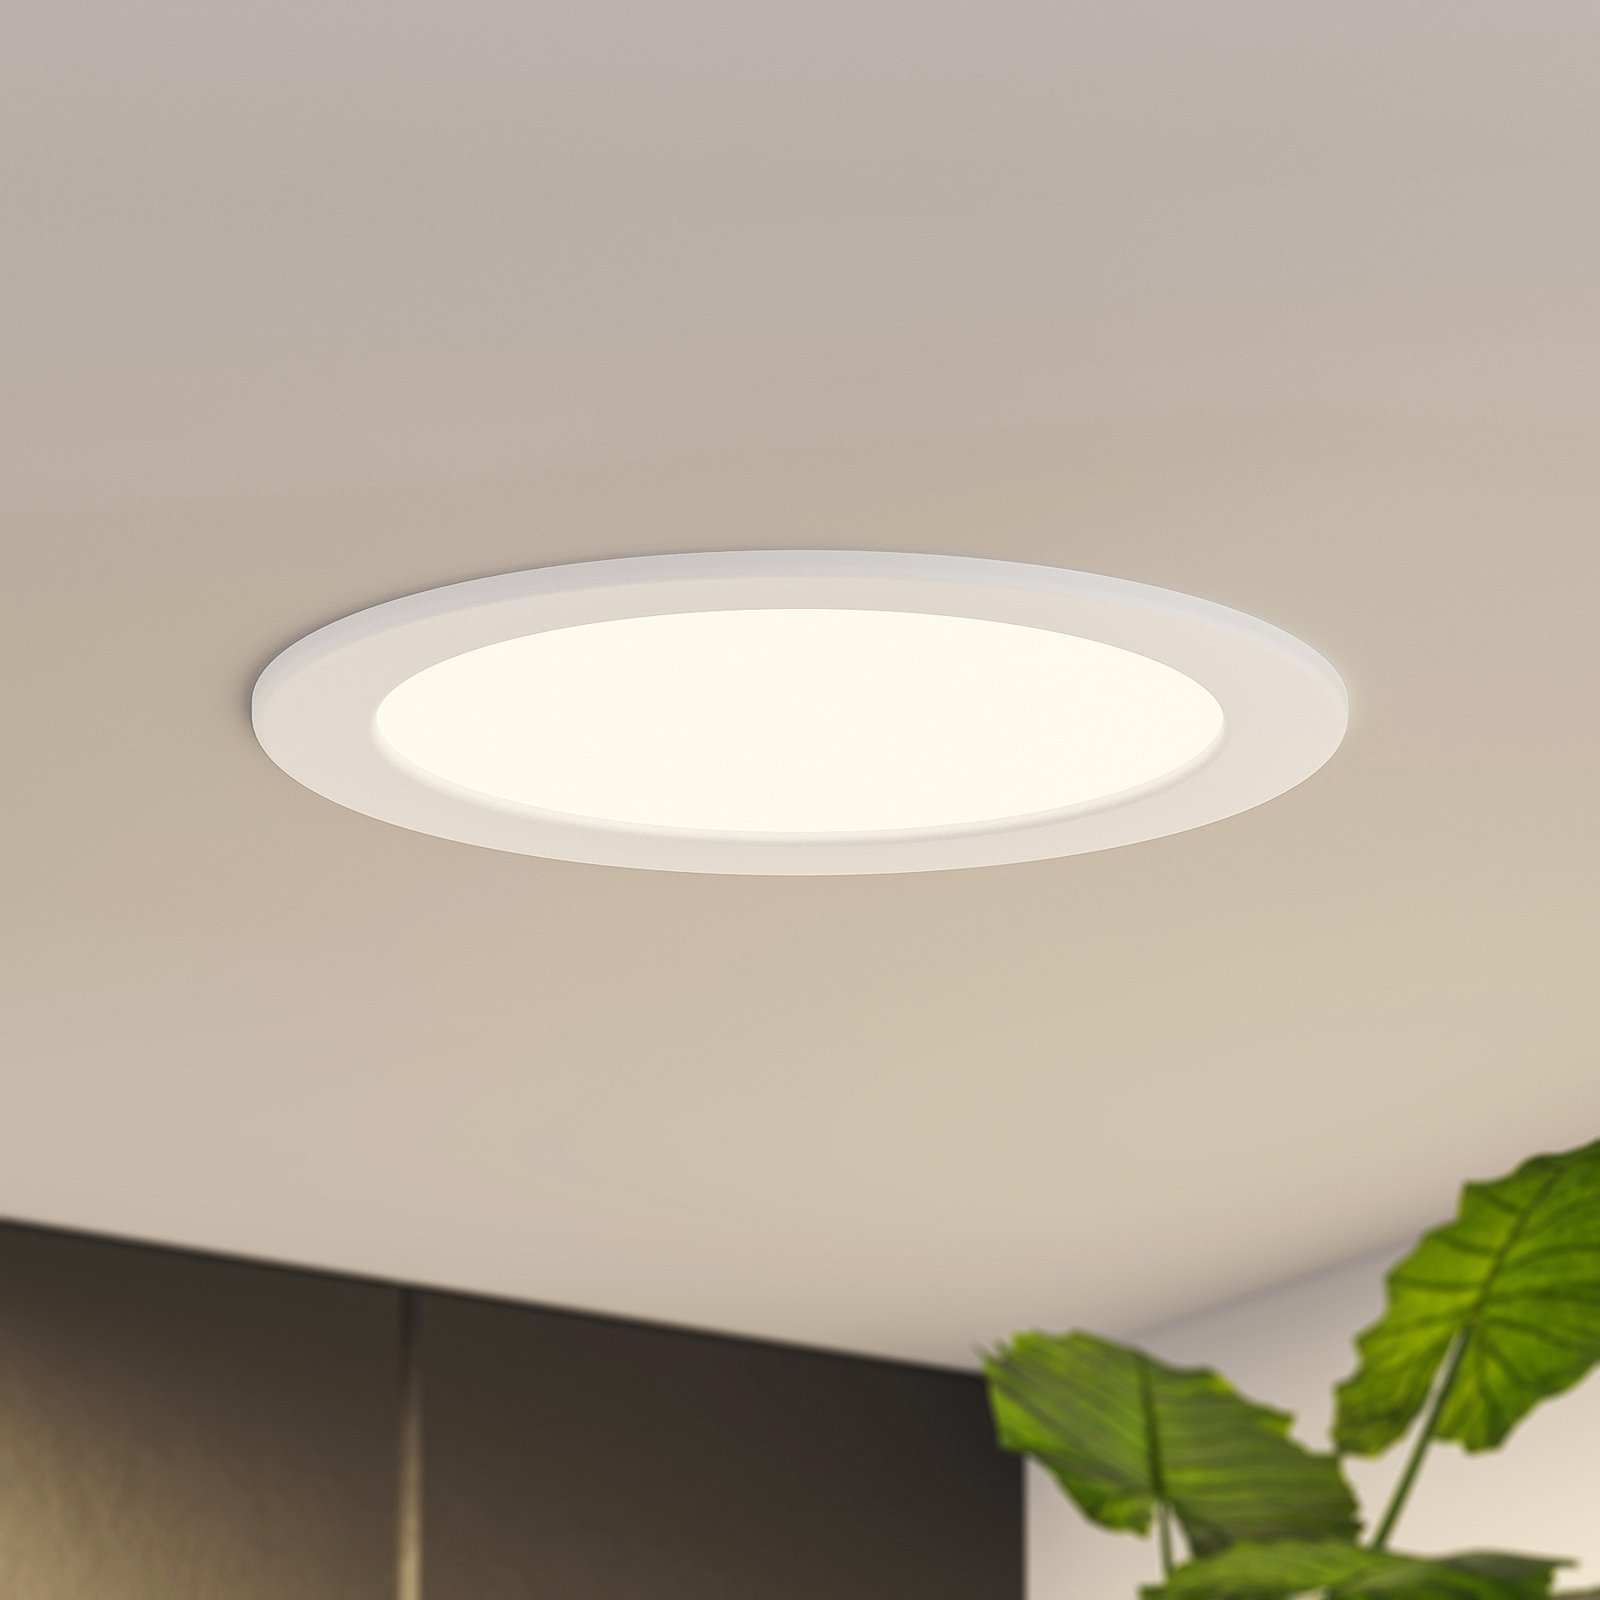 Prios Cadance LED inbouwlamp, wit, 22 cm